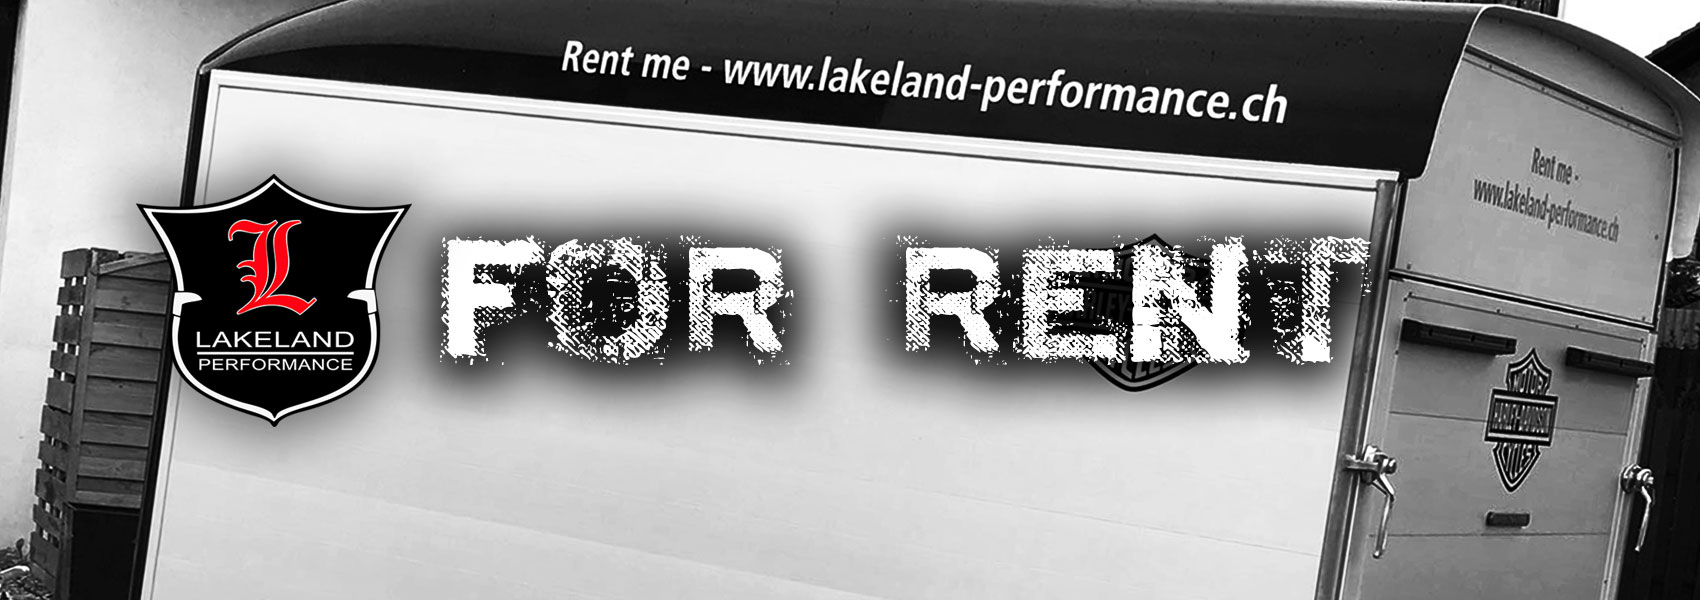 Lakeland Performance